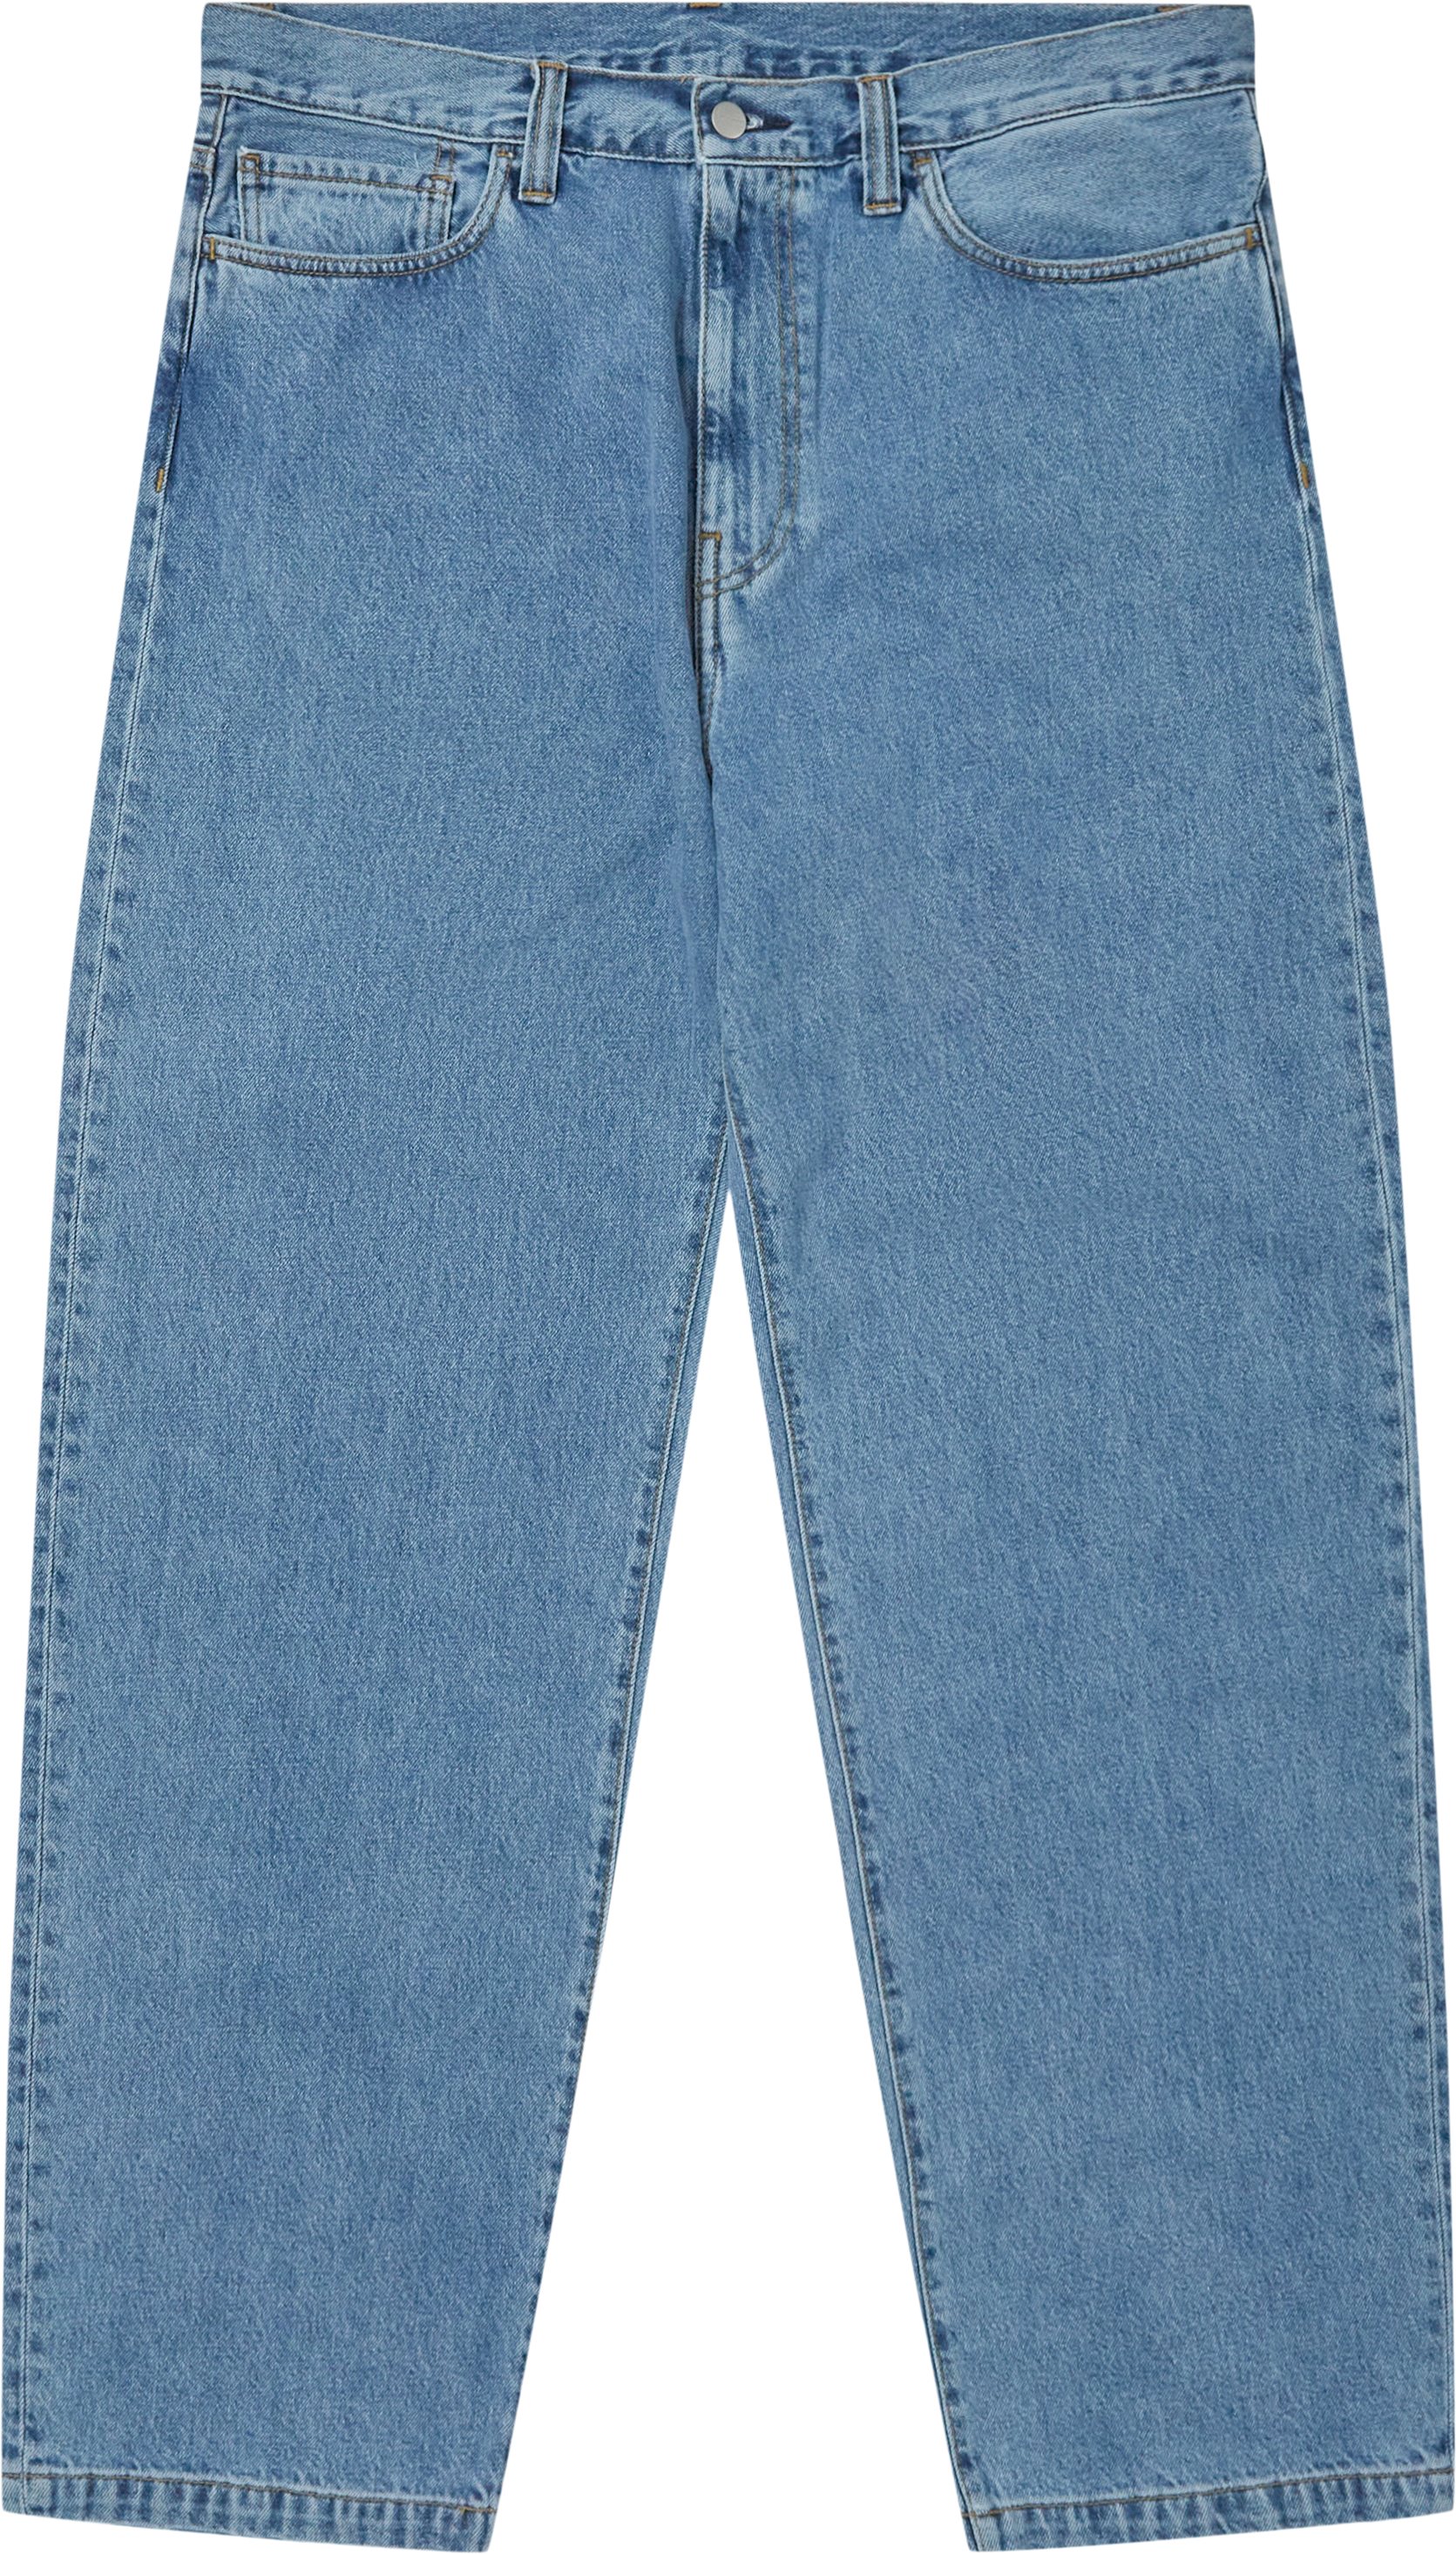 Landon Pant I030468 - Jeans - Baggy fit - Denim